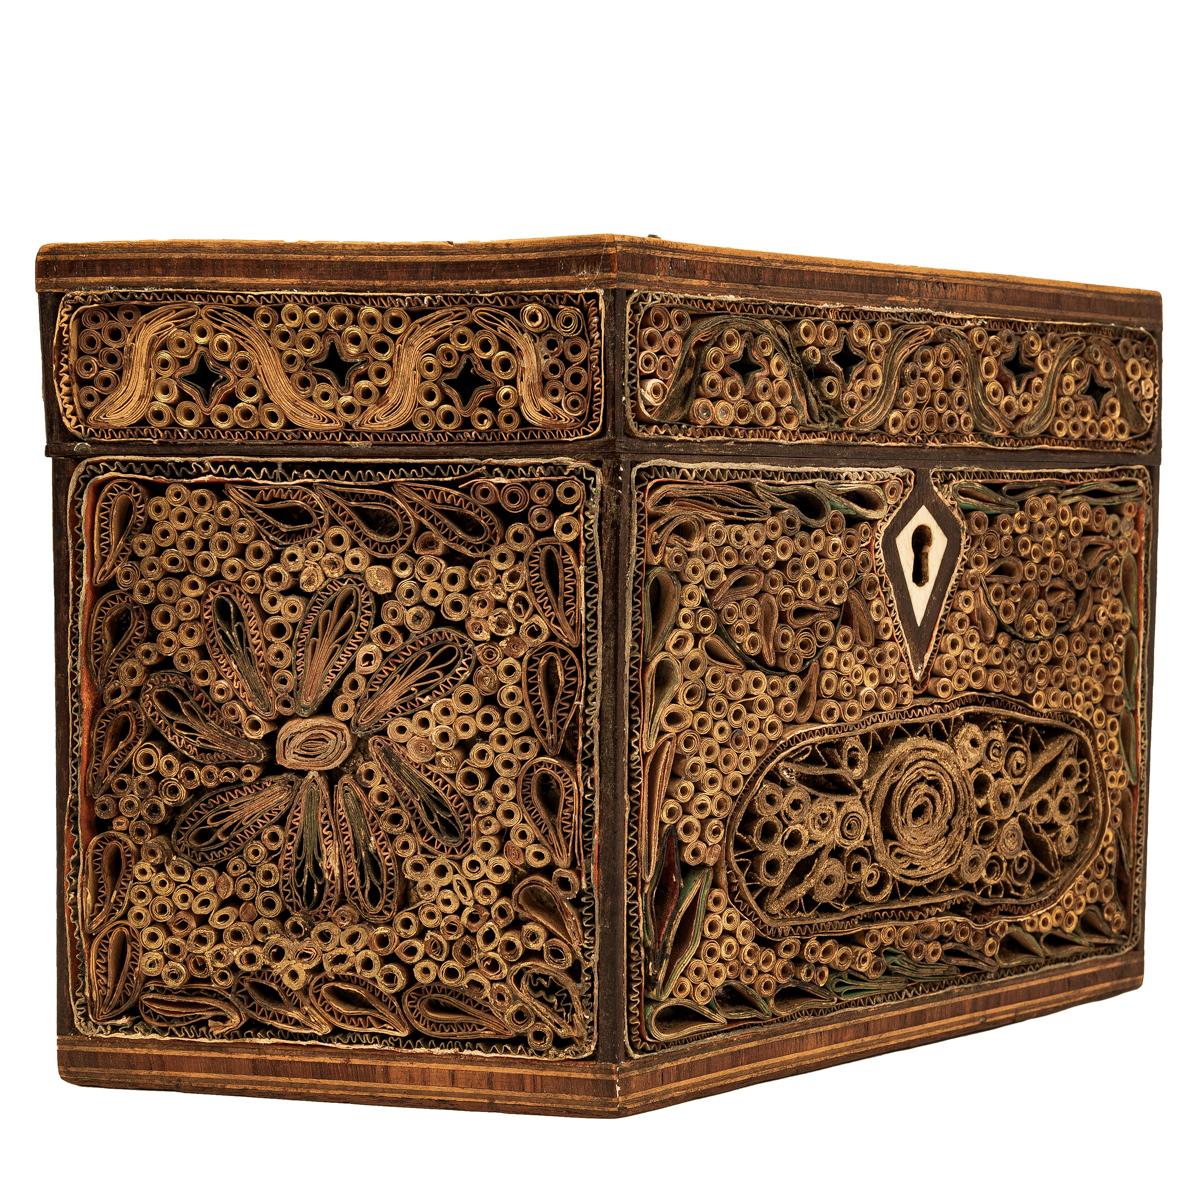 English Antique 18th Century Georgian Mahoghany Paper Scroll Work Tea Caddy Box 1780 For Sale